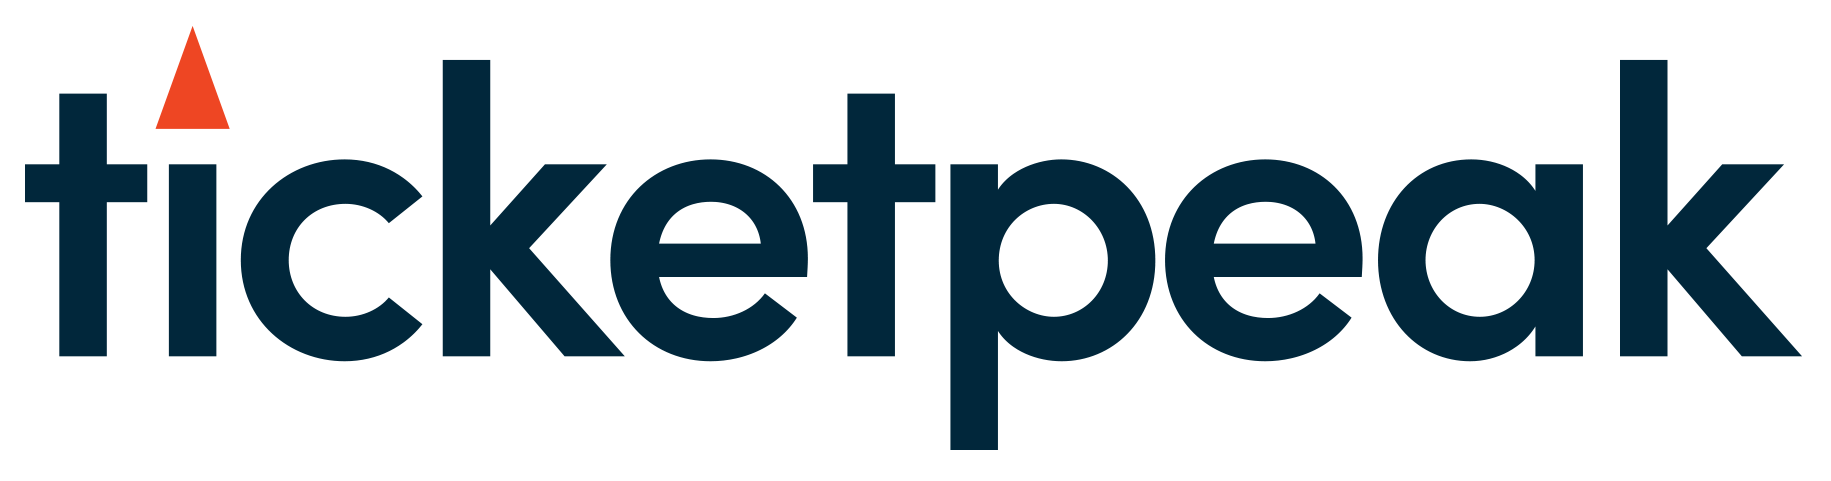 TicketPeak Logo